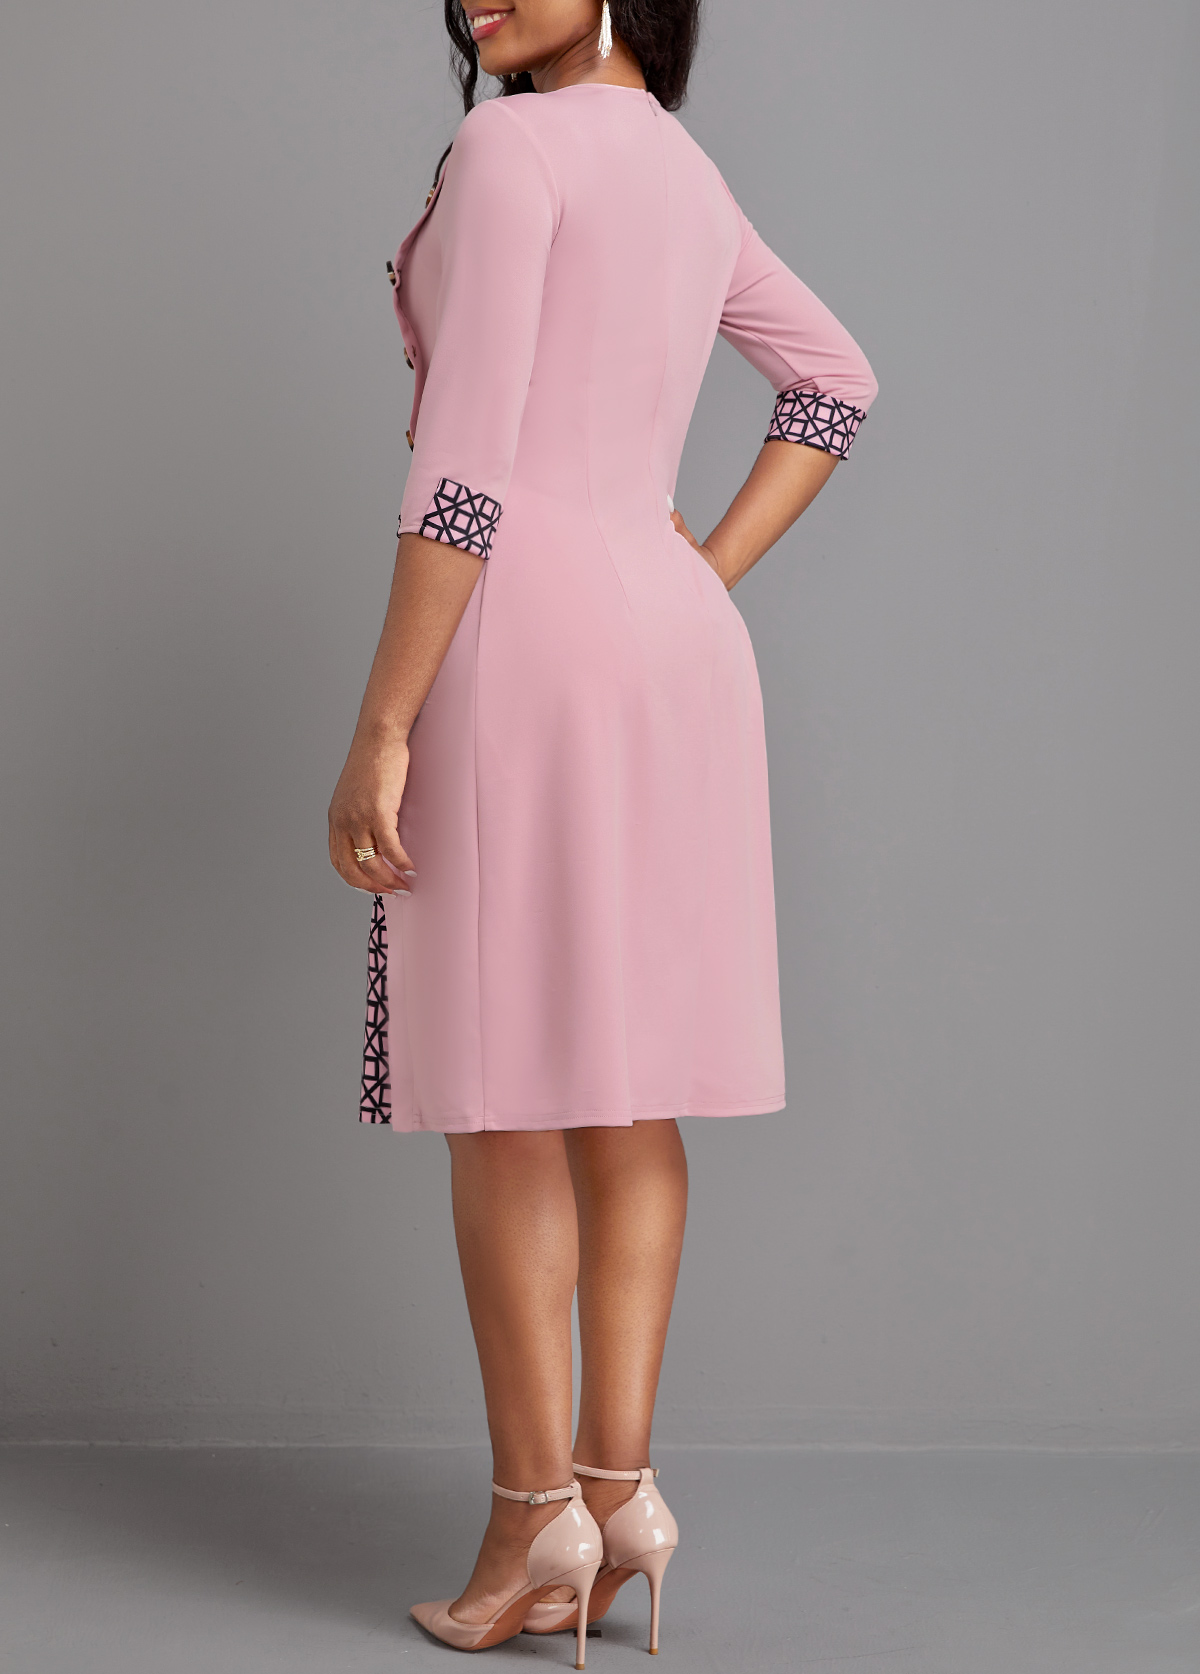 Geometric Print Button Pink A Line Dress